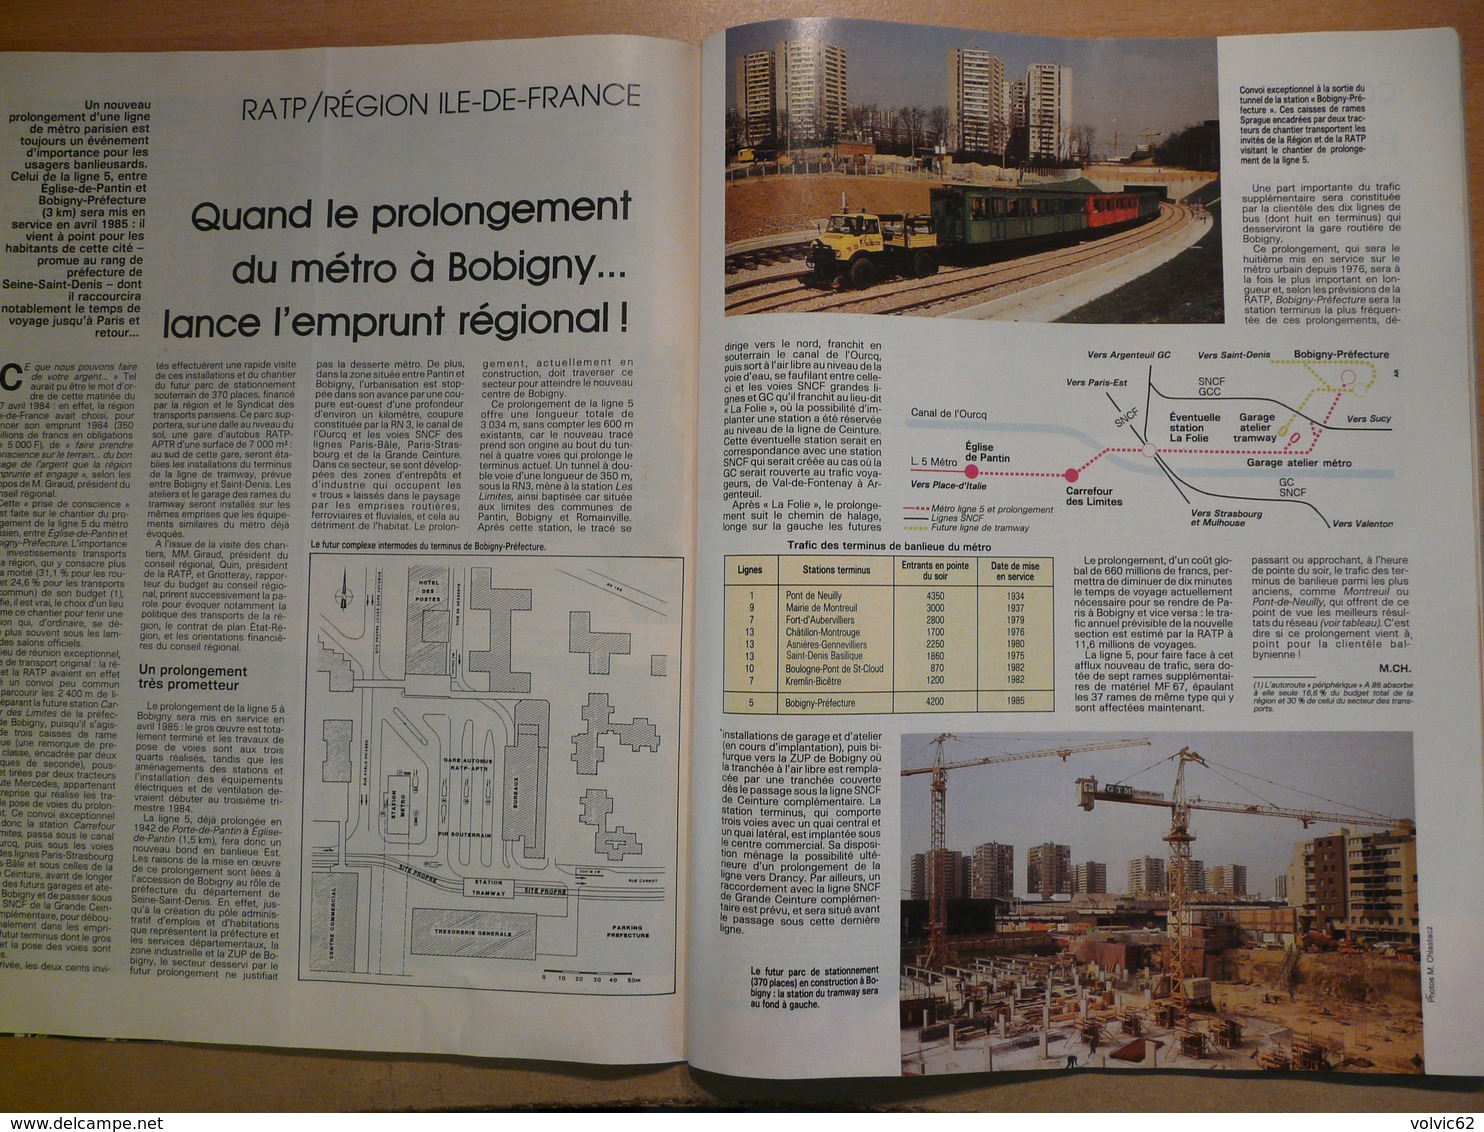 Vie du Rail 1945 1984 Provins atelier romilly bobigny conflans fin d'oise mercantour givors canal